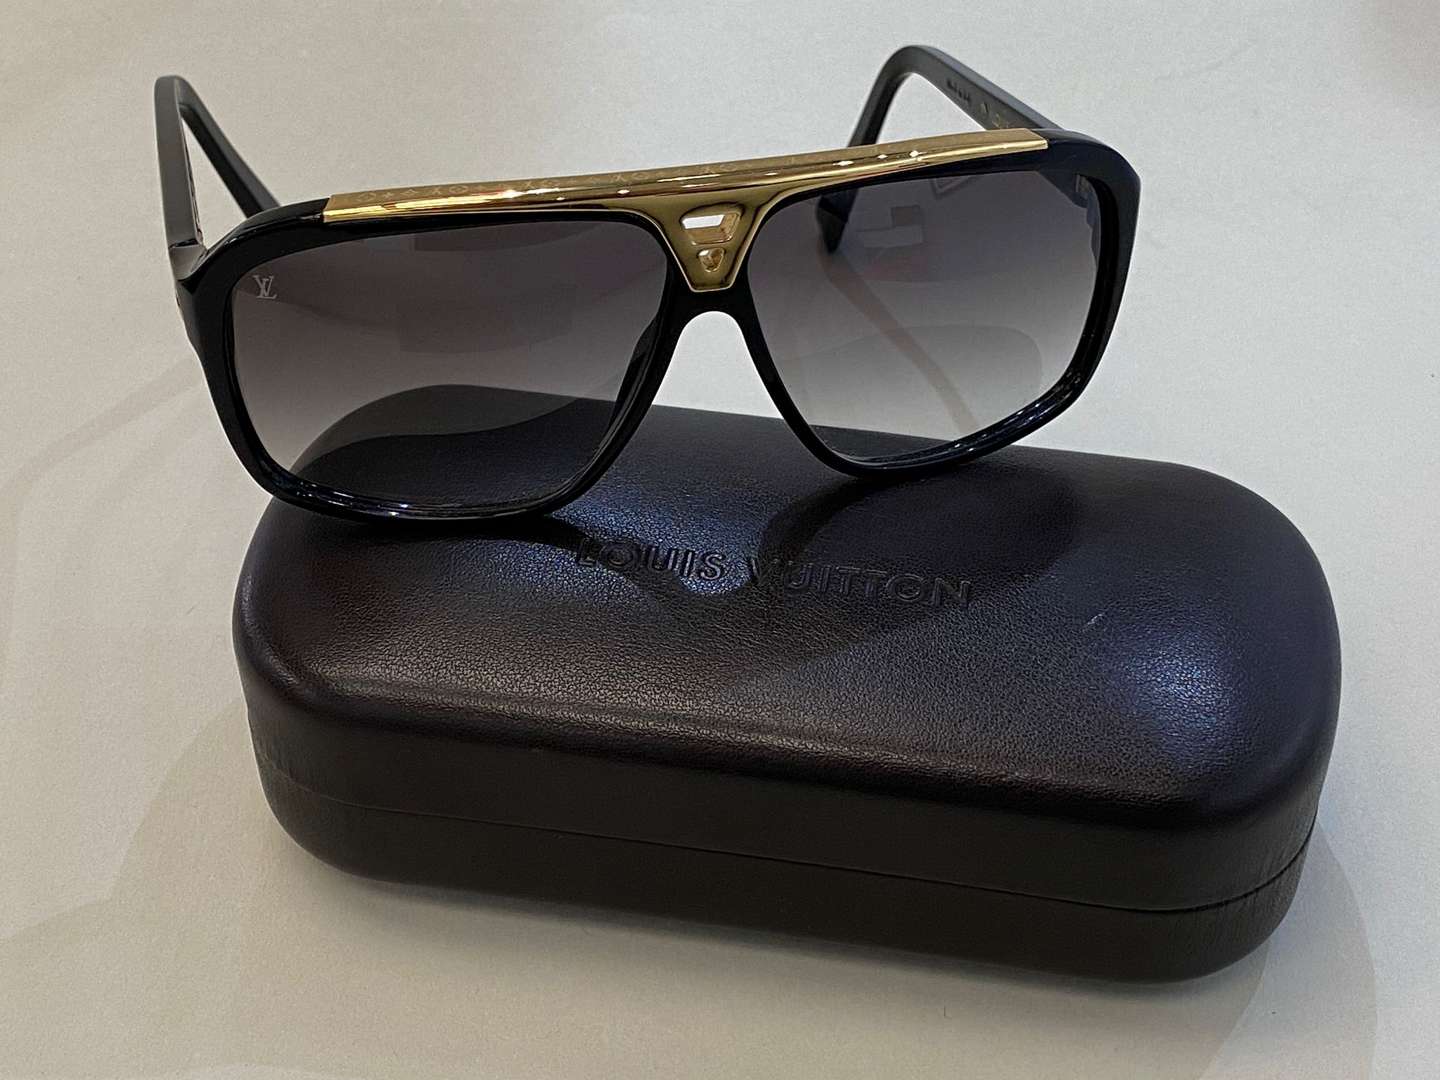 <p>LOUIS VUITTON, a pair of Italian, gilt mounted, black framed sunglasses</p>